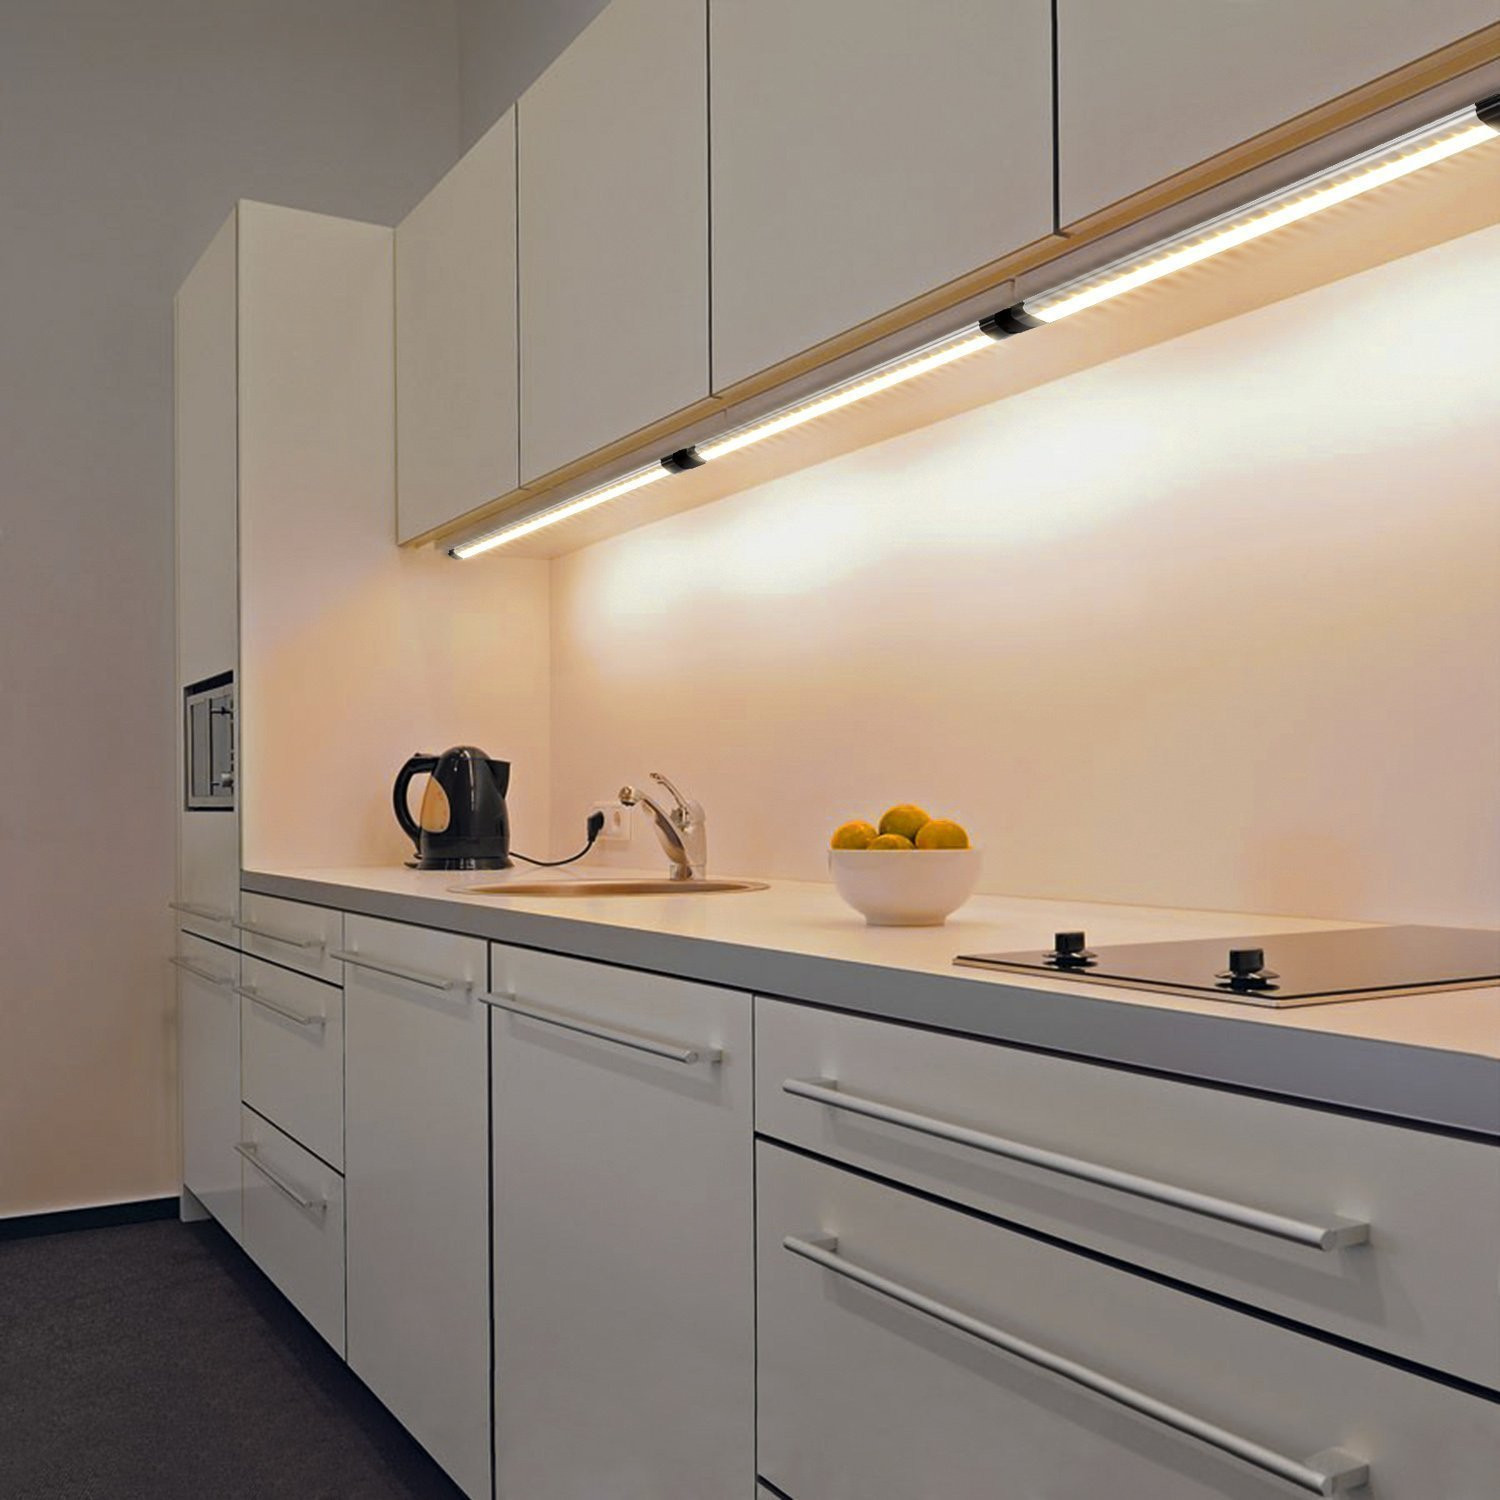 Led Under Kitchen Cabinet Lights
 Galleon Albrillo LED Under Cabinet Lighting Dimmable